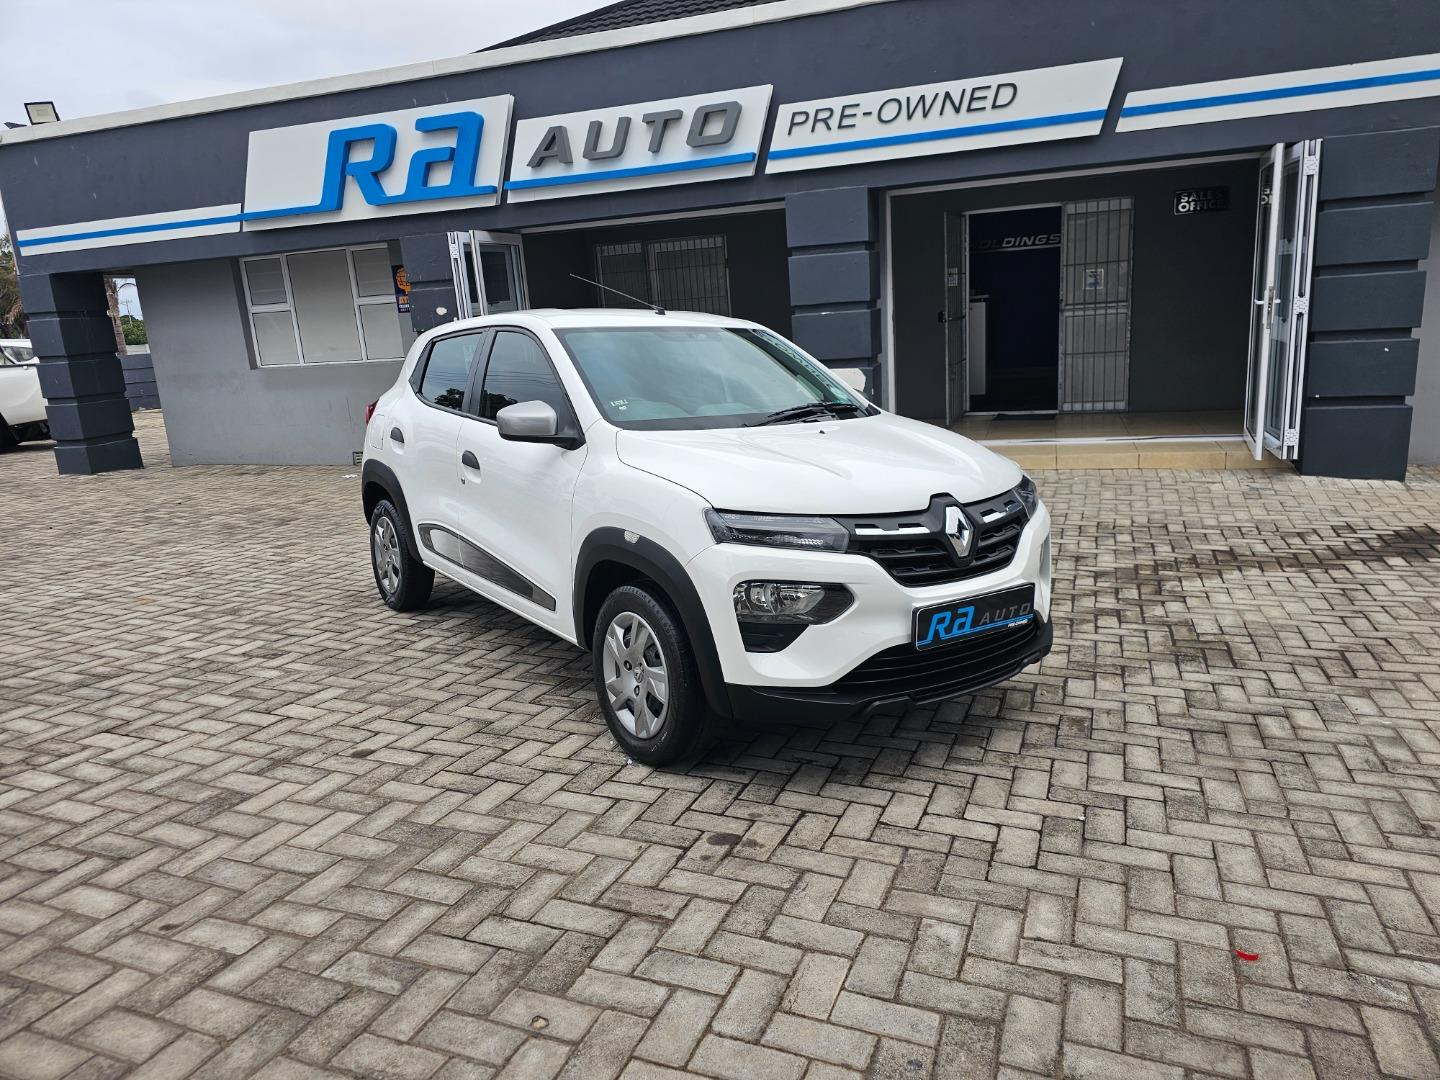 2021 Renault Kwid 1.0 Dynamique For Sale